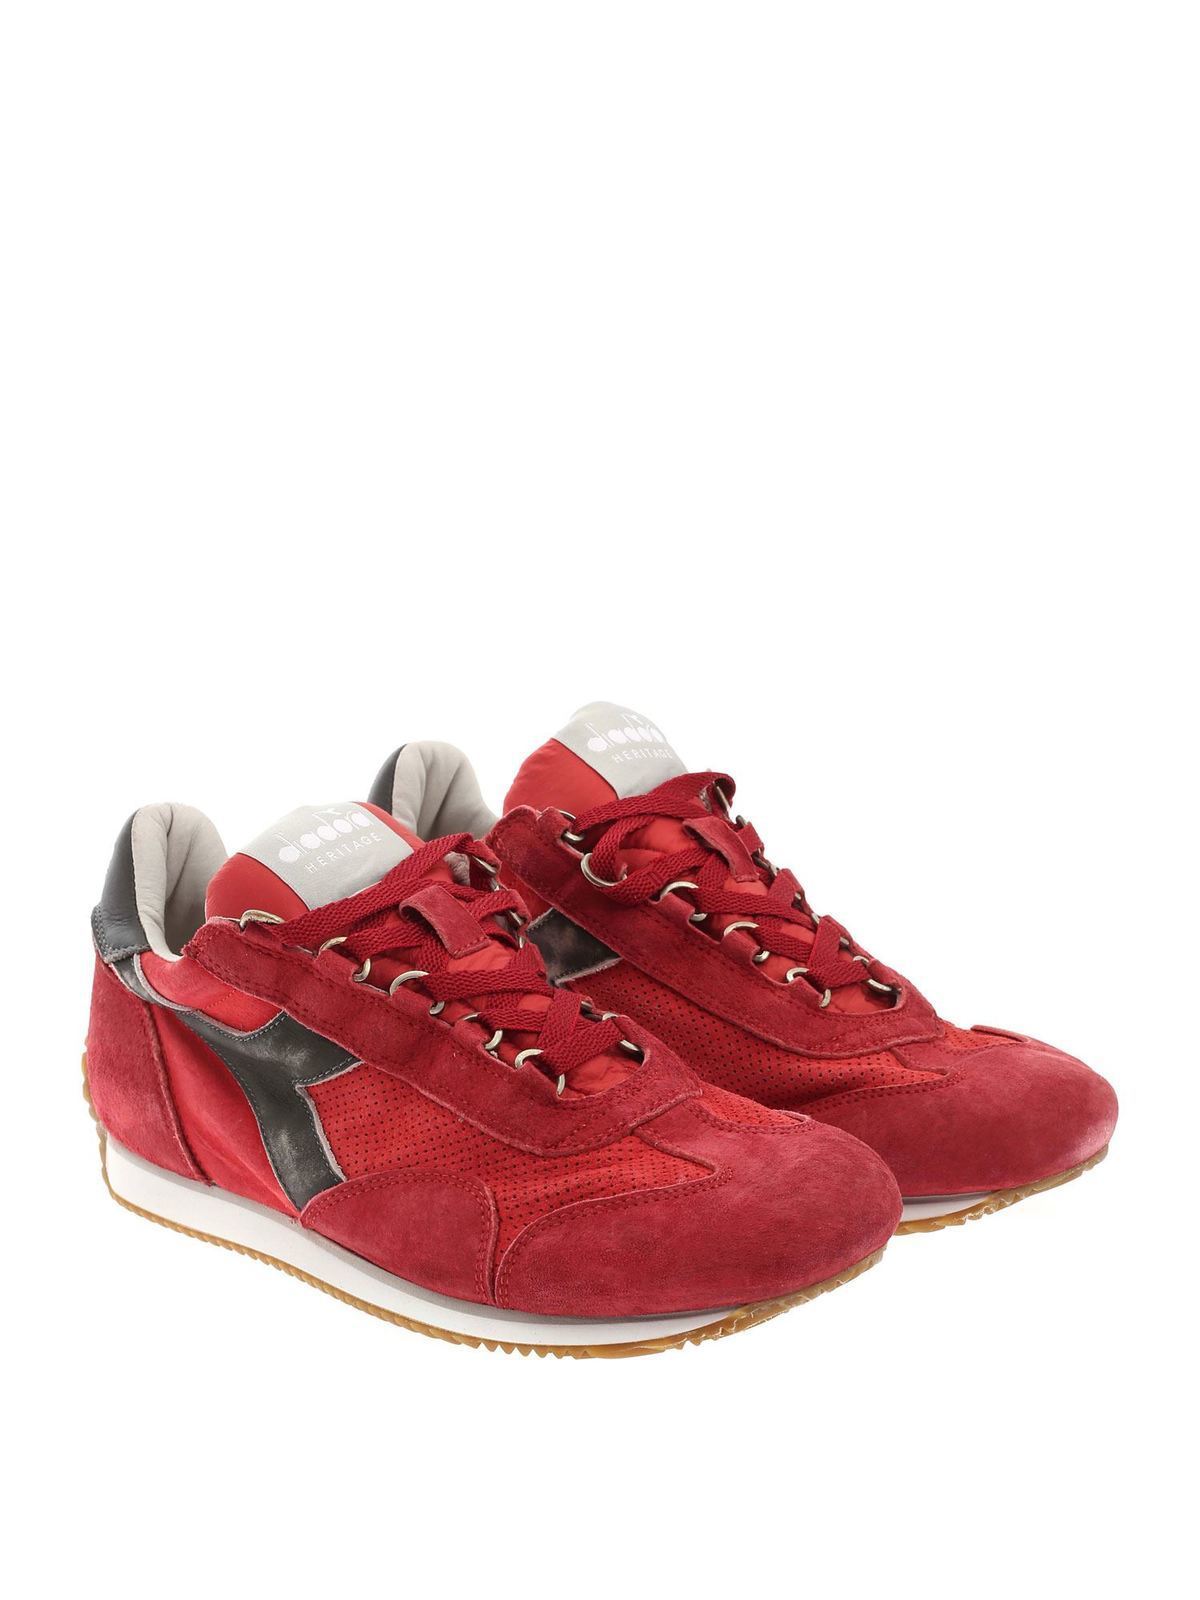 Sinis Dwang Aardbei Trainers Diadora Heritage - Equipe Suede Sw sneakers in red -  2011751500155013